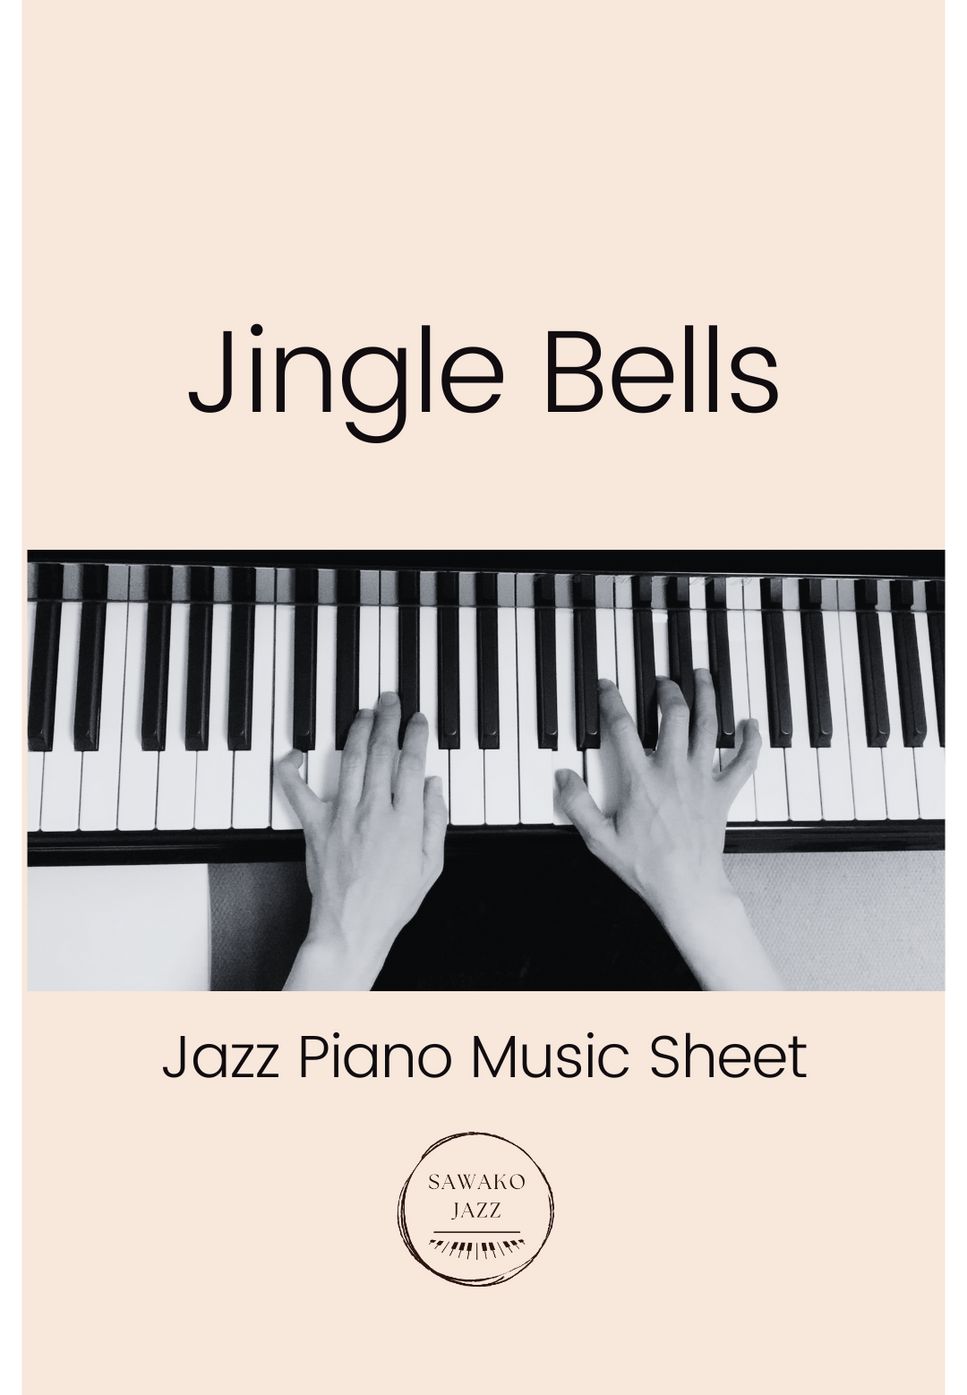 James Lord Pierpont - Jingle Bells (piano solo / jazz) by Sawako Hyodo